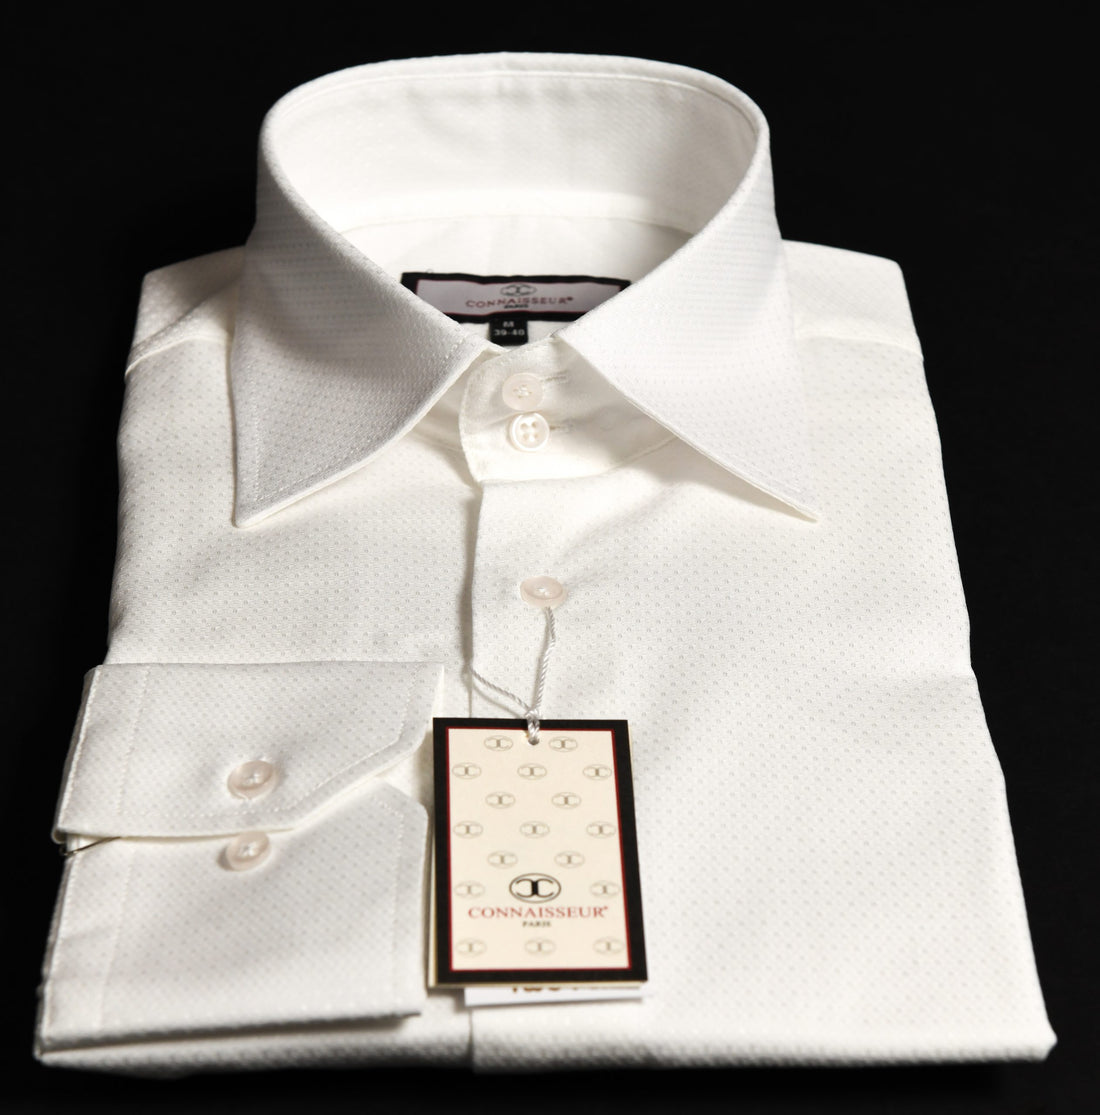 Connaisseur -  White two ply cotton raised collar slim fit dress shirt